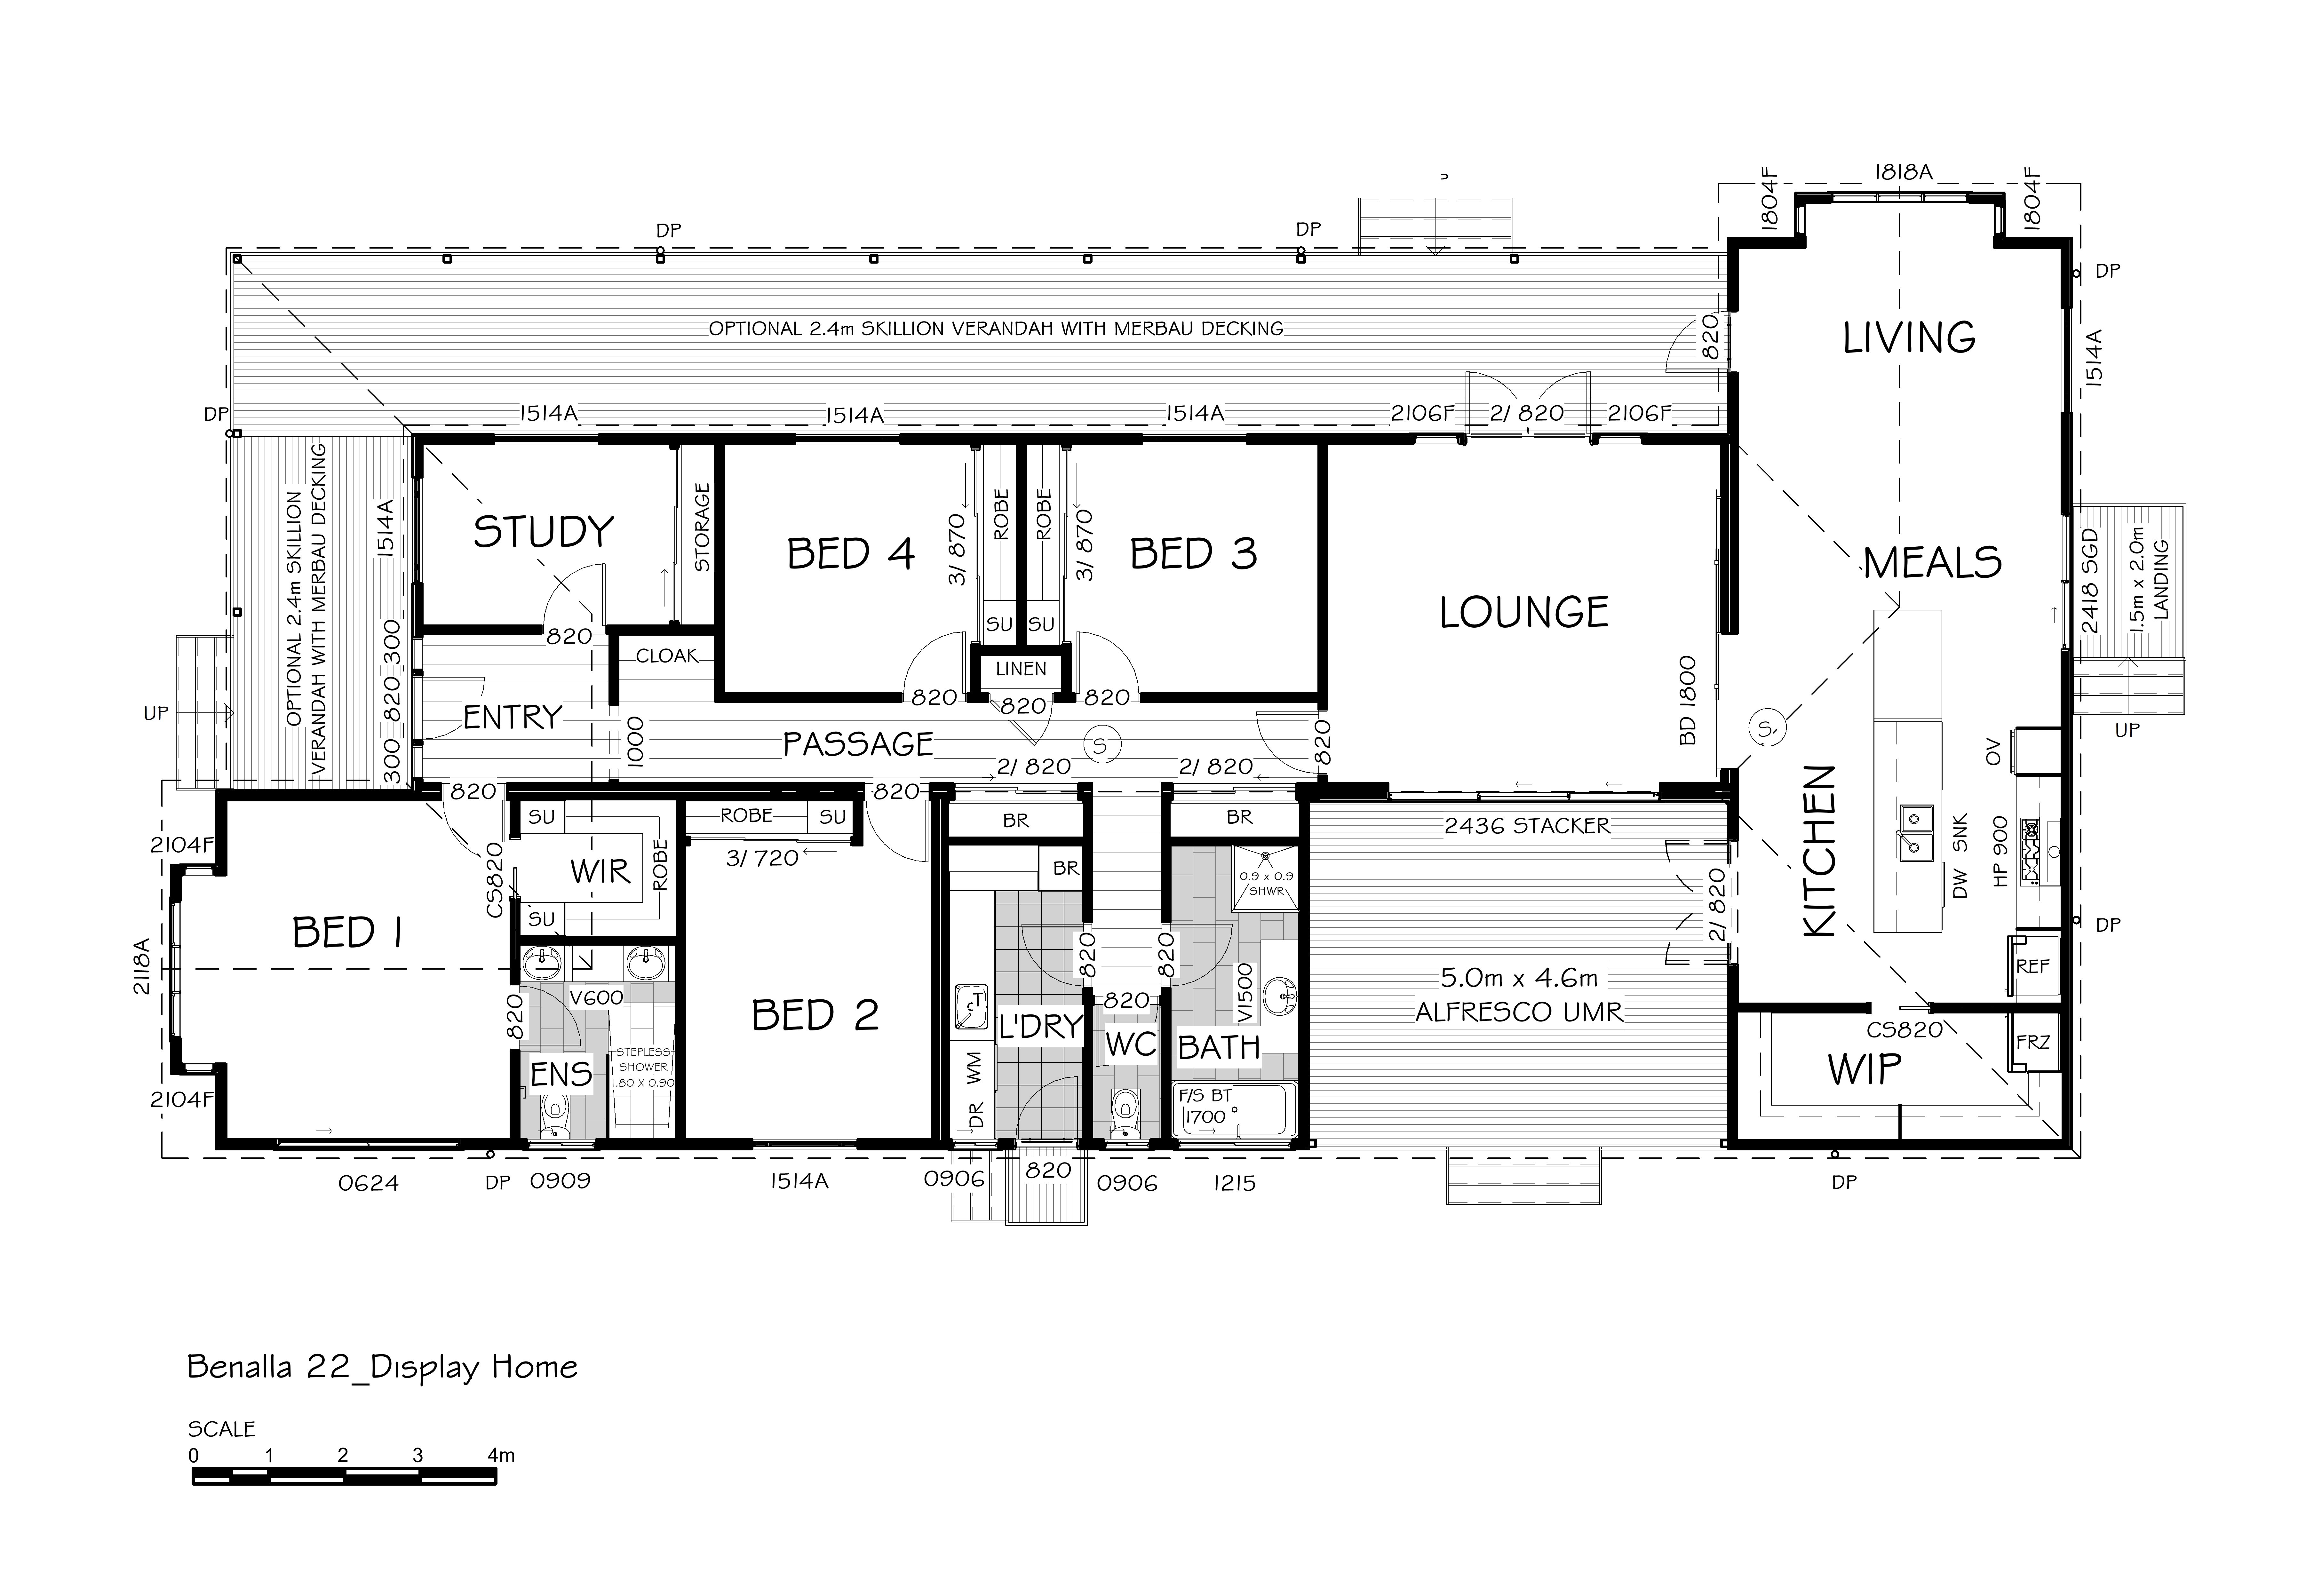 BENALLA 22 Display Home floor plan